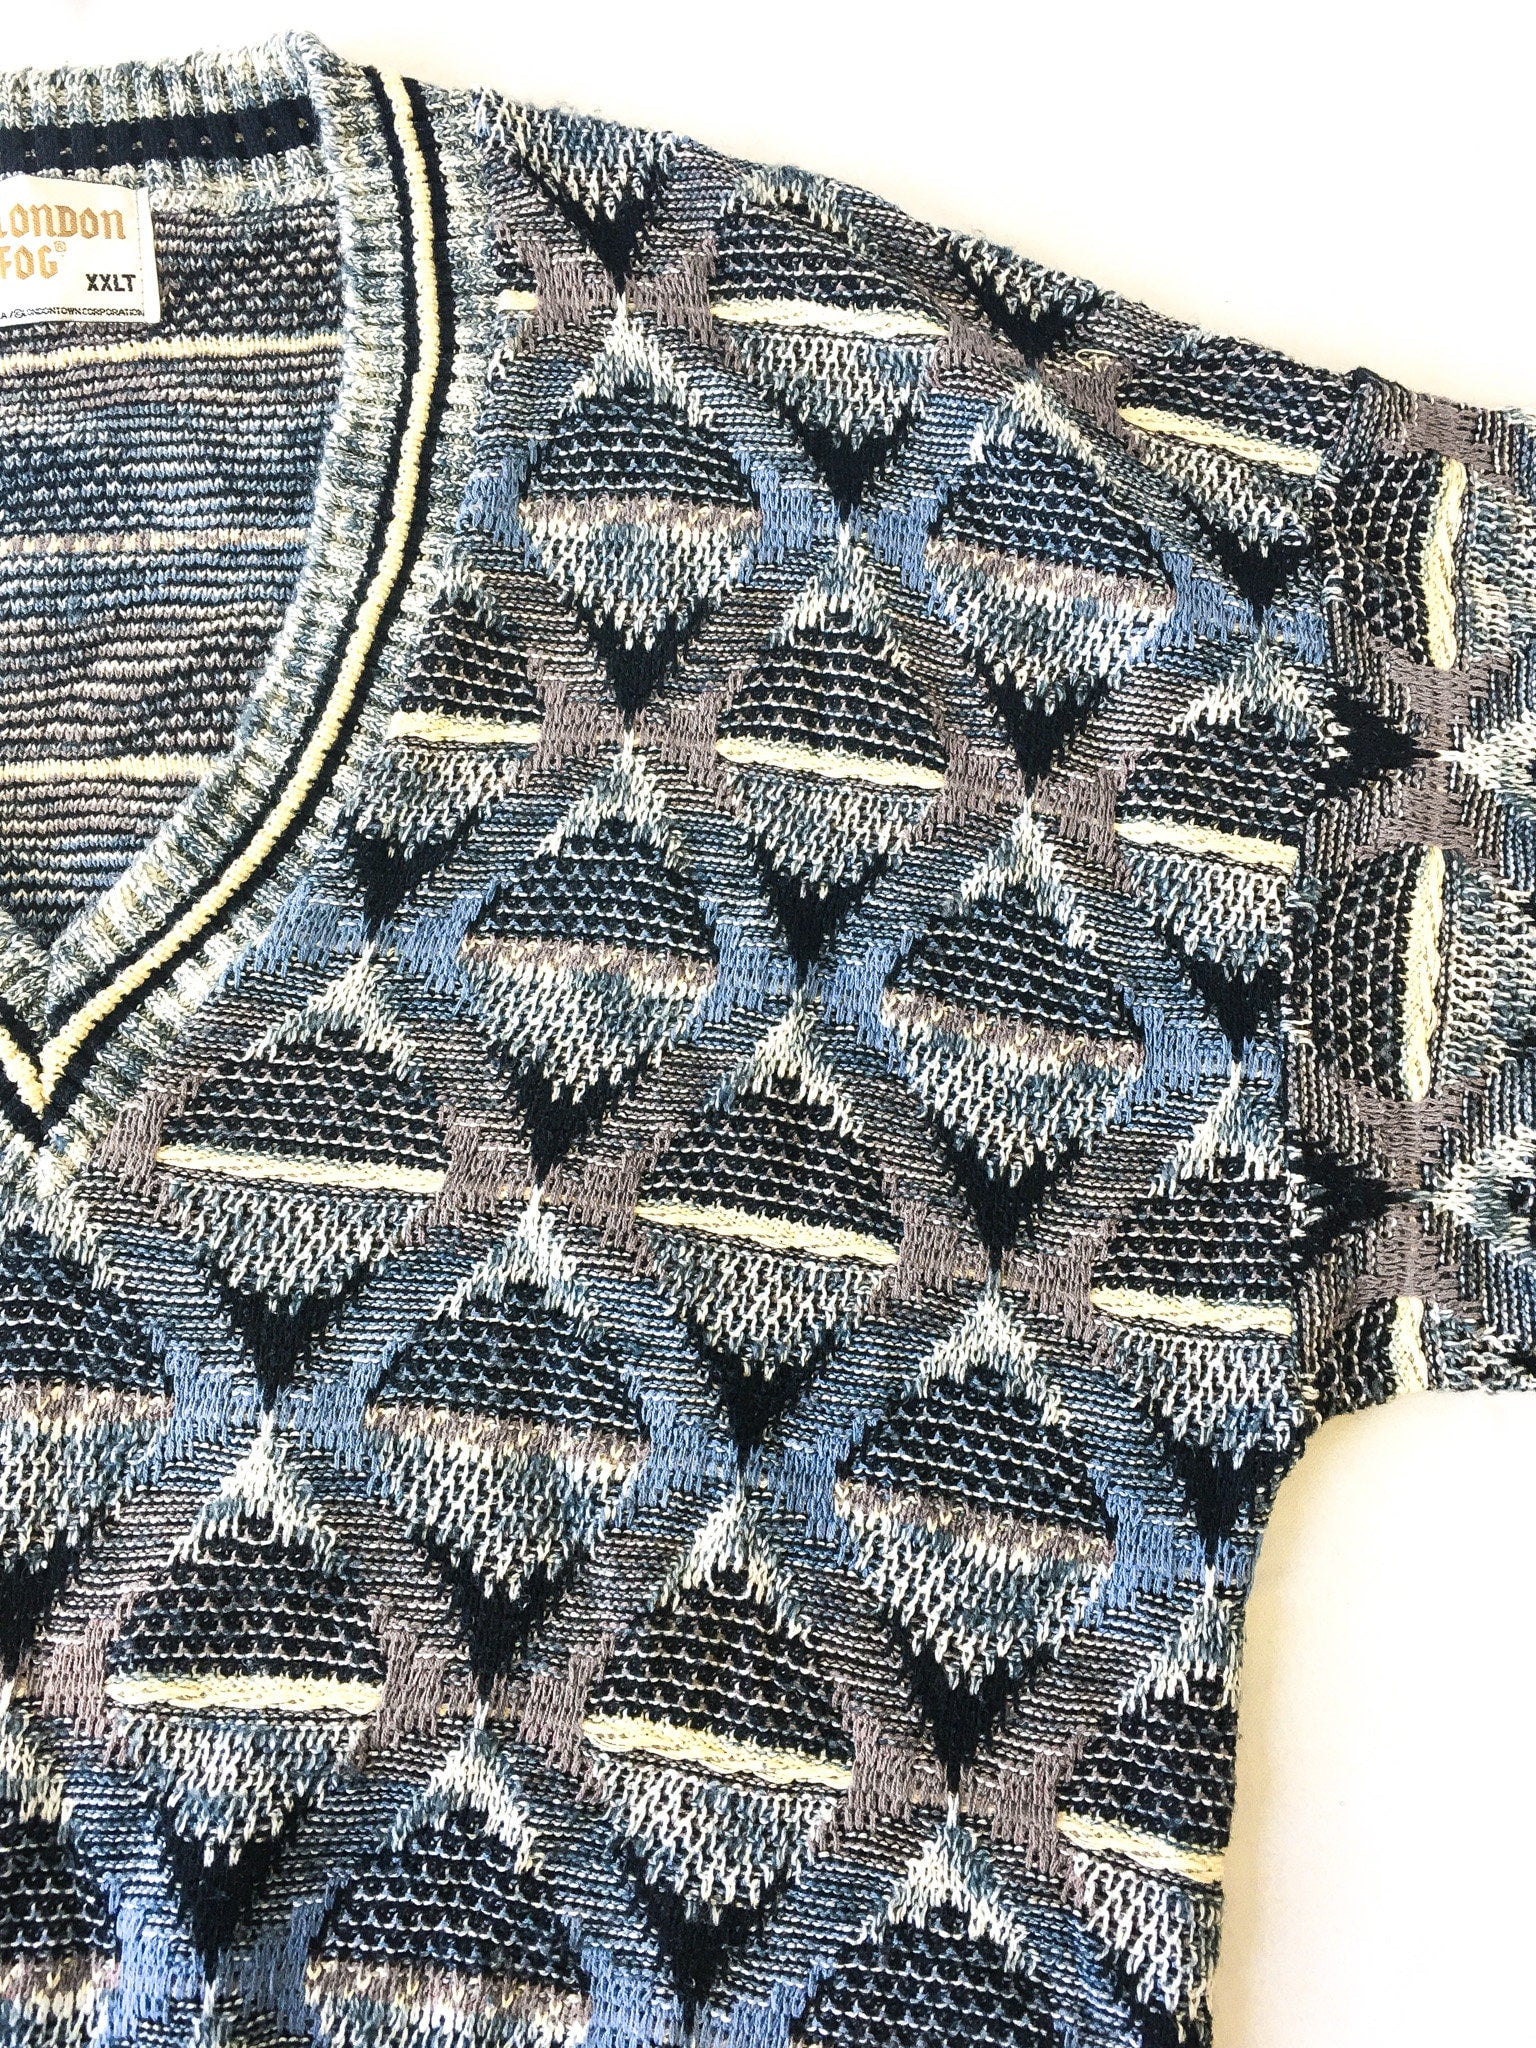 Vintage London Fog Blue Geometric Patterned V-Neck Sweater, Men's Sz. XXL Tall, Made in USA, Vintage Grandpa Sweater